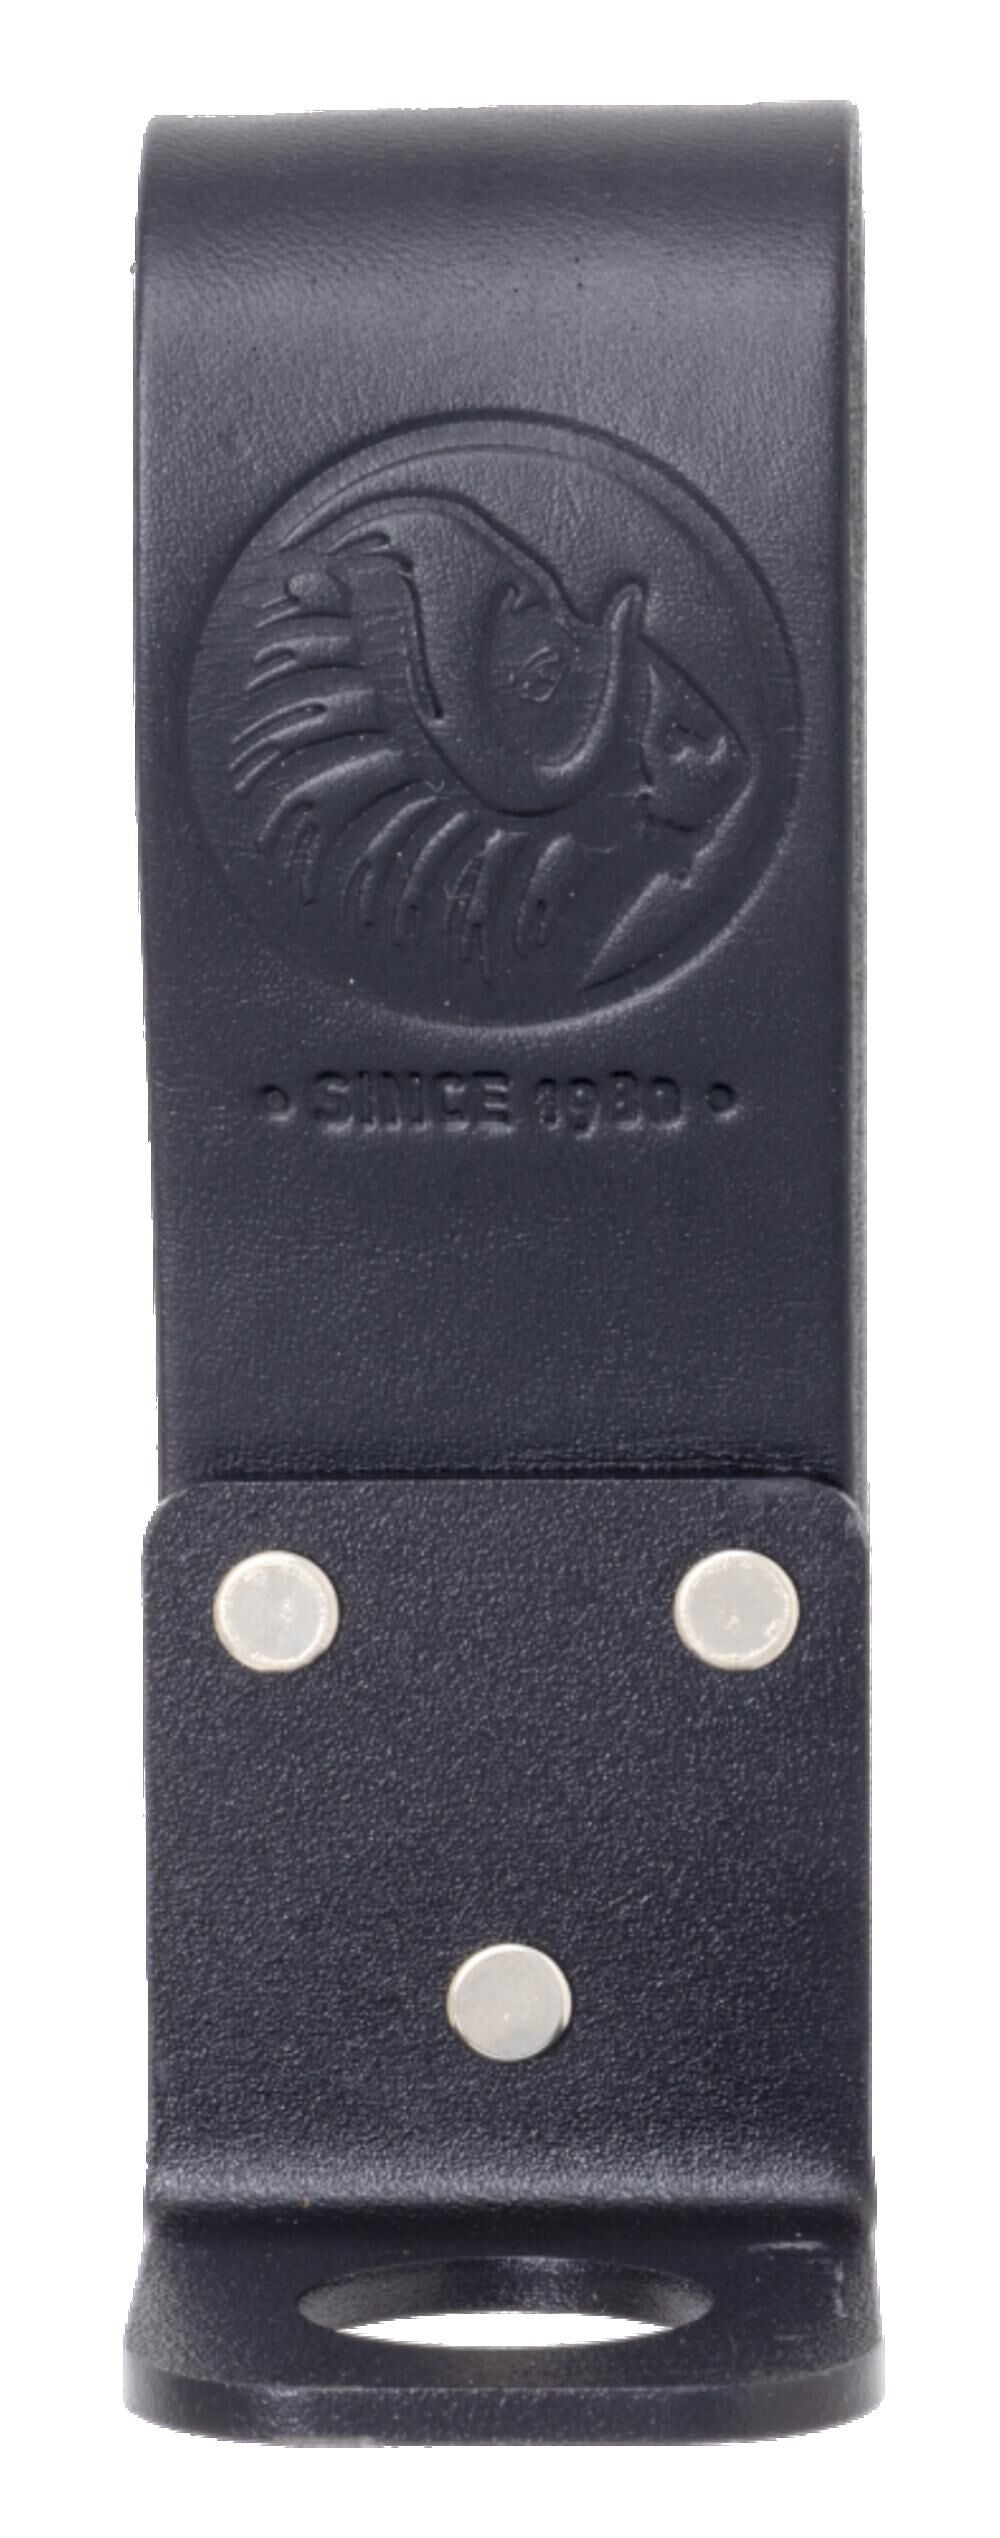 Leather Sleeve Bar Holder, Black B5232